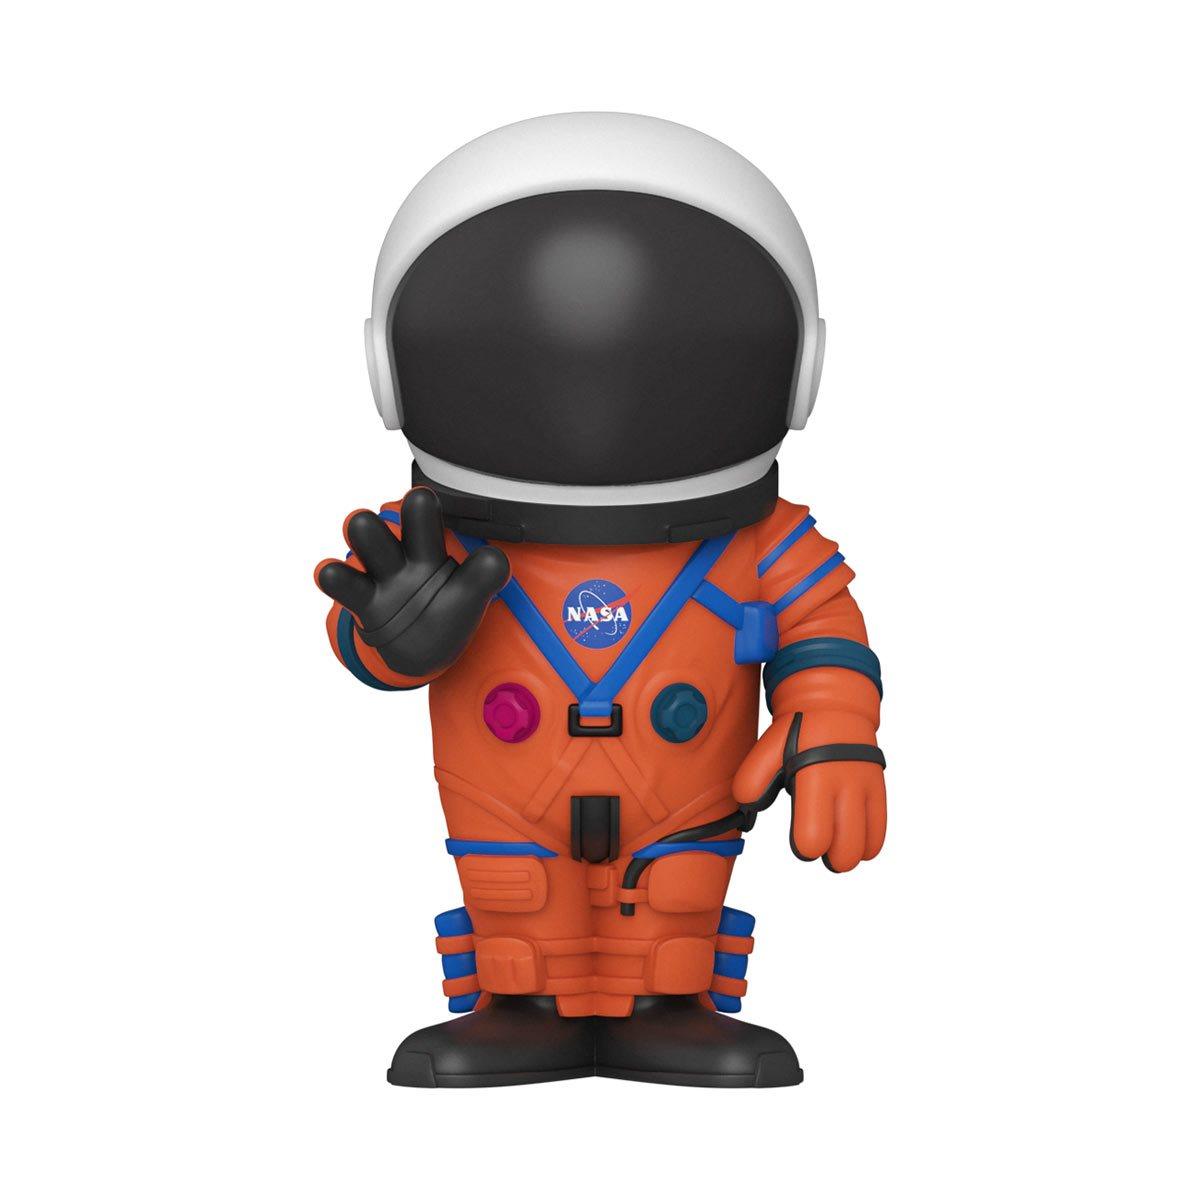 FUNKO VINYL SODA: Icon - Nasa Astronaut - D-Pop